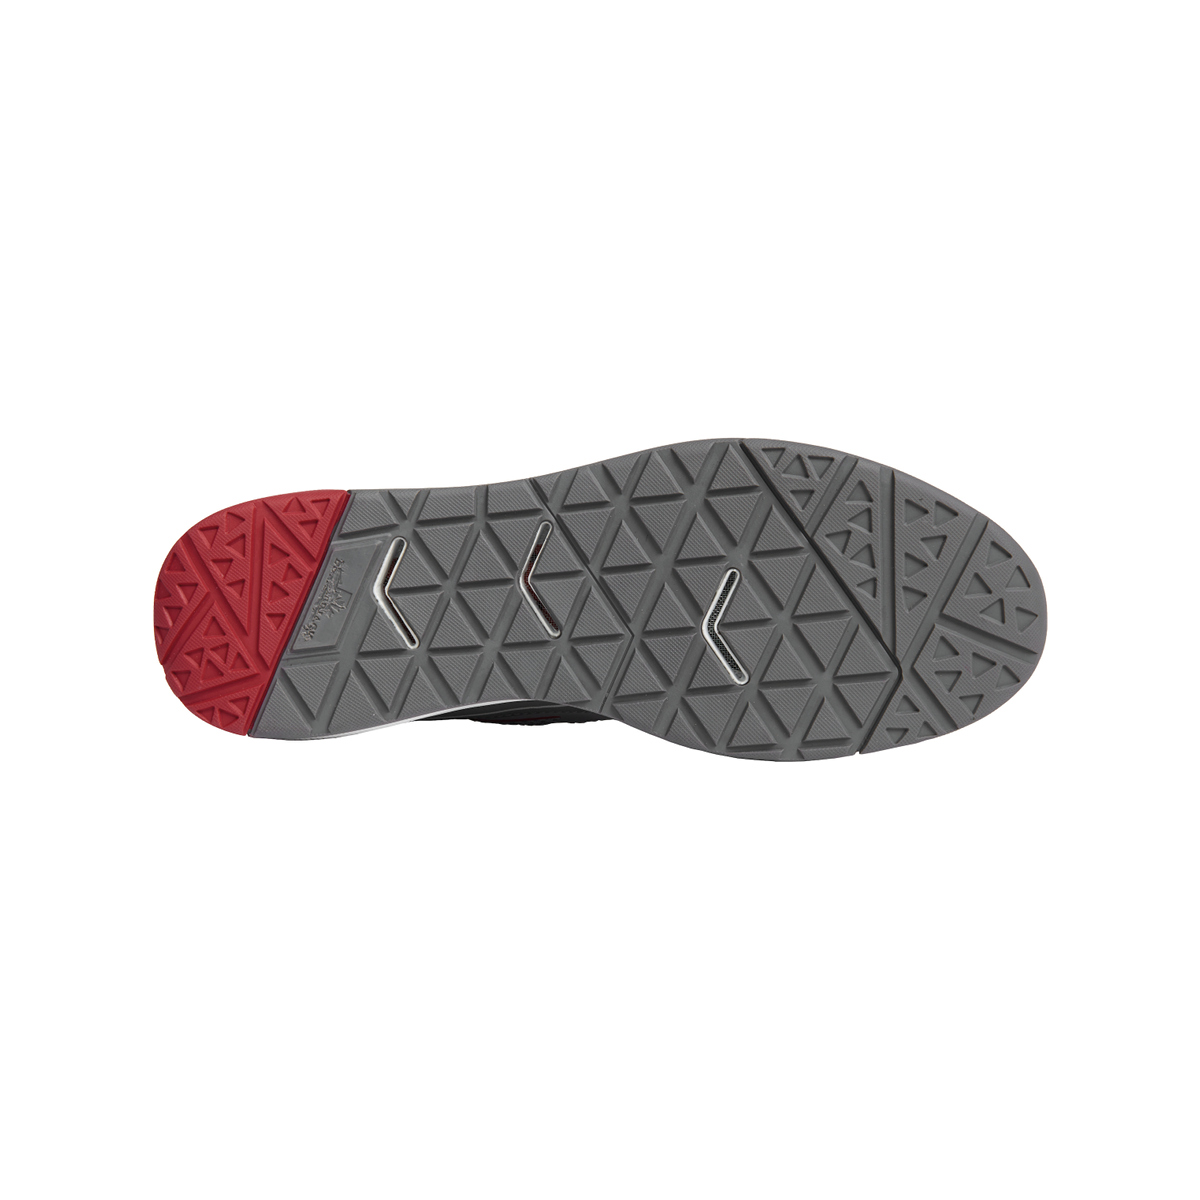 Marinepool Ocean Runner chaussure de pont, unisexe - gris, pointure 44